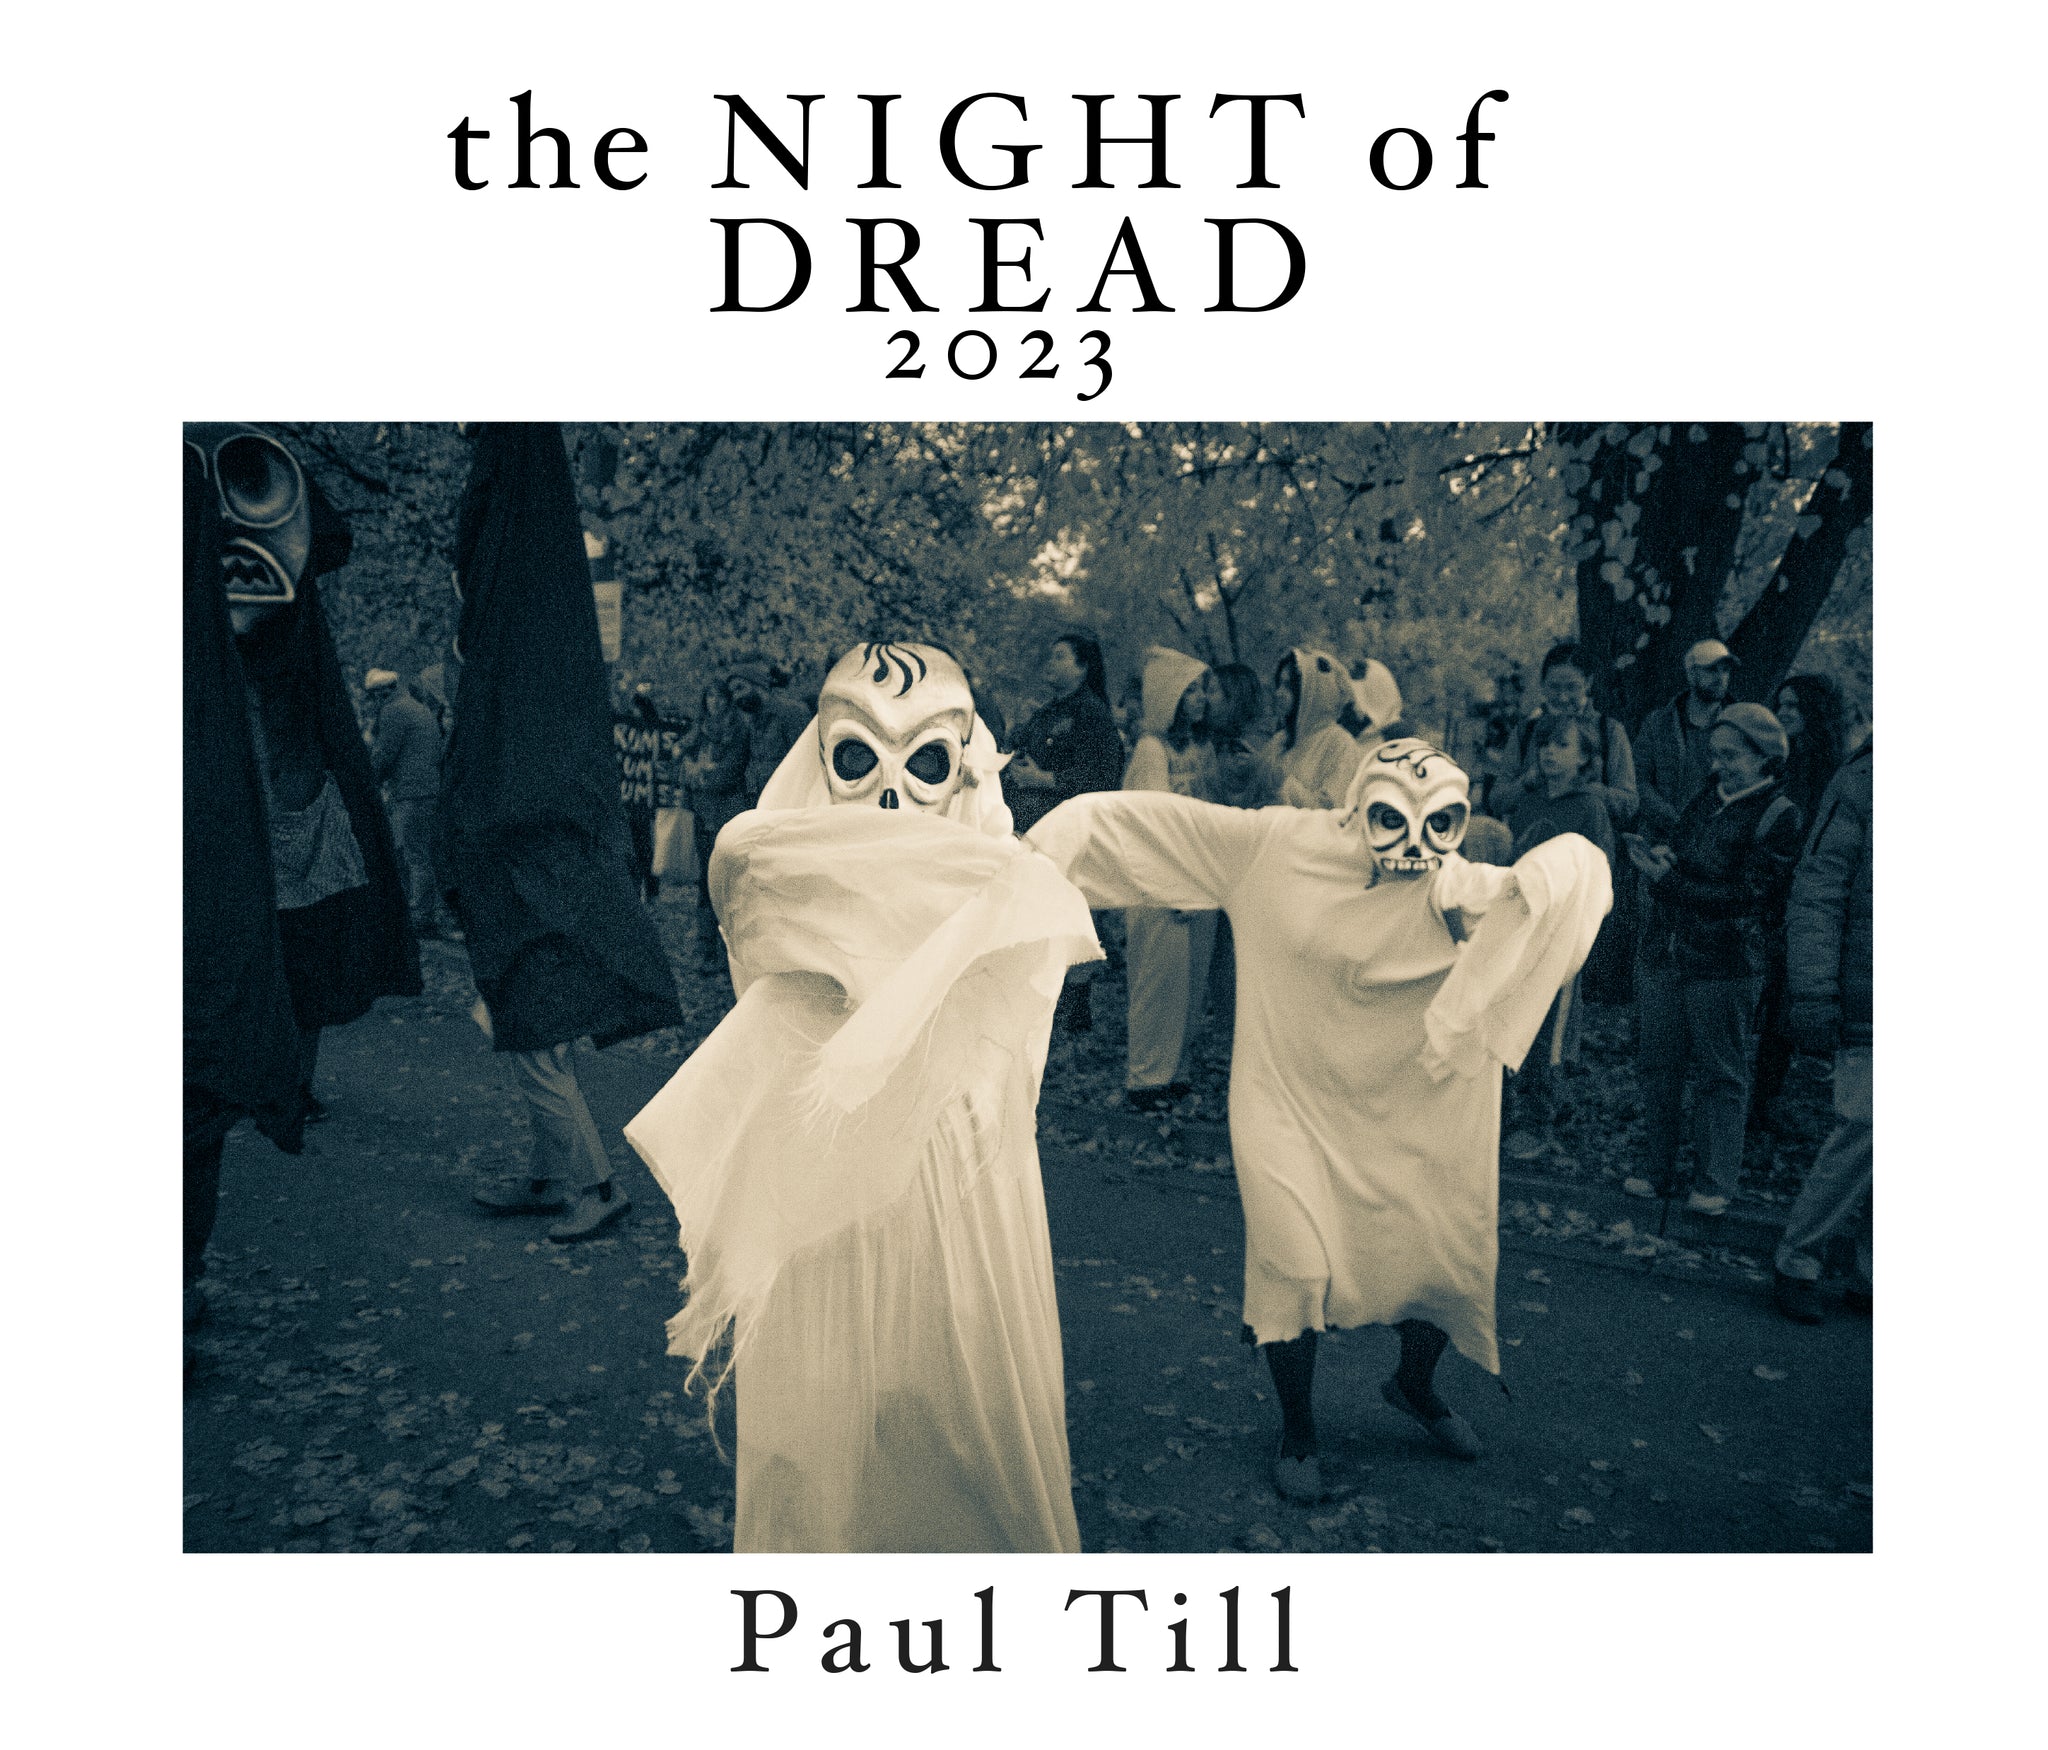 The Night of Dread 2023